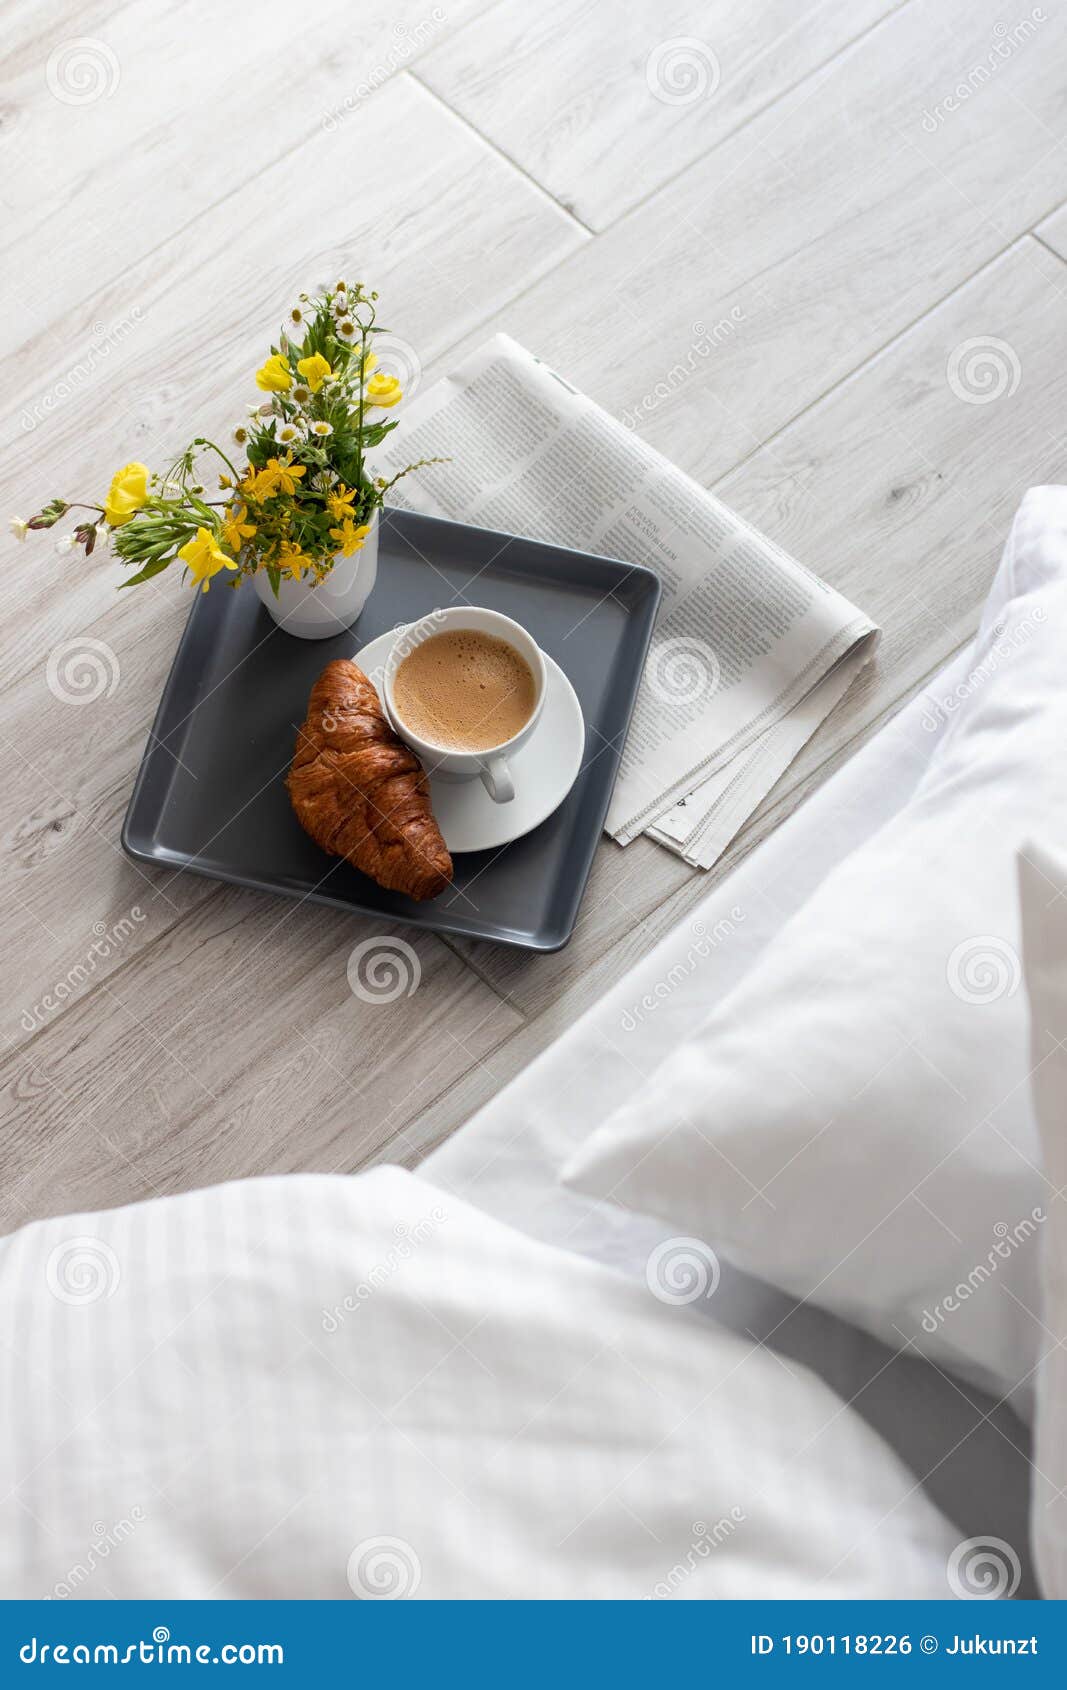 Breakfast bed tray -  France